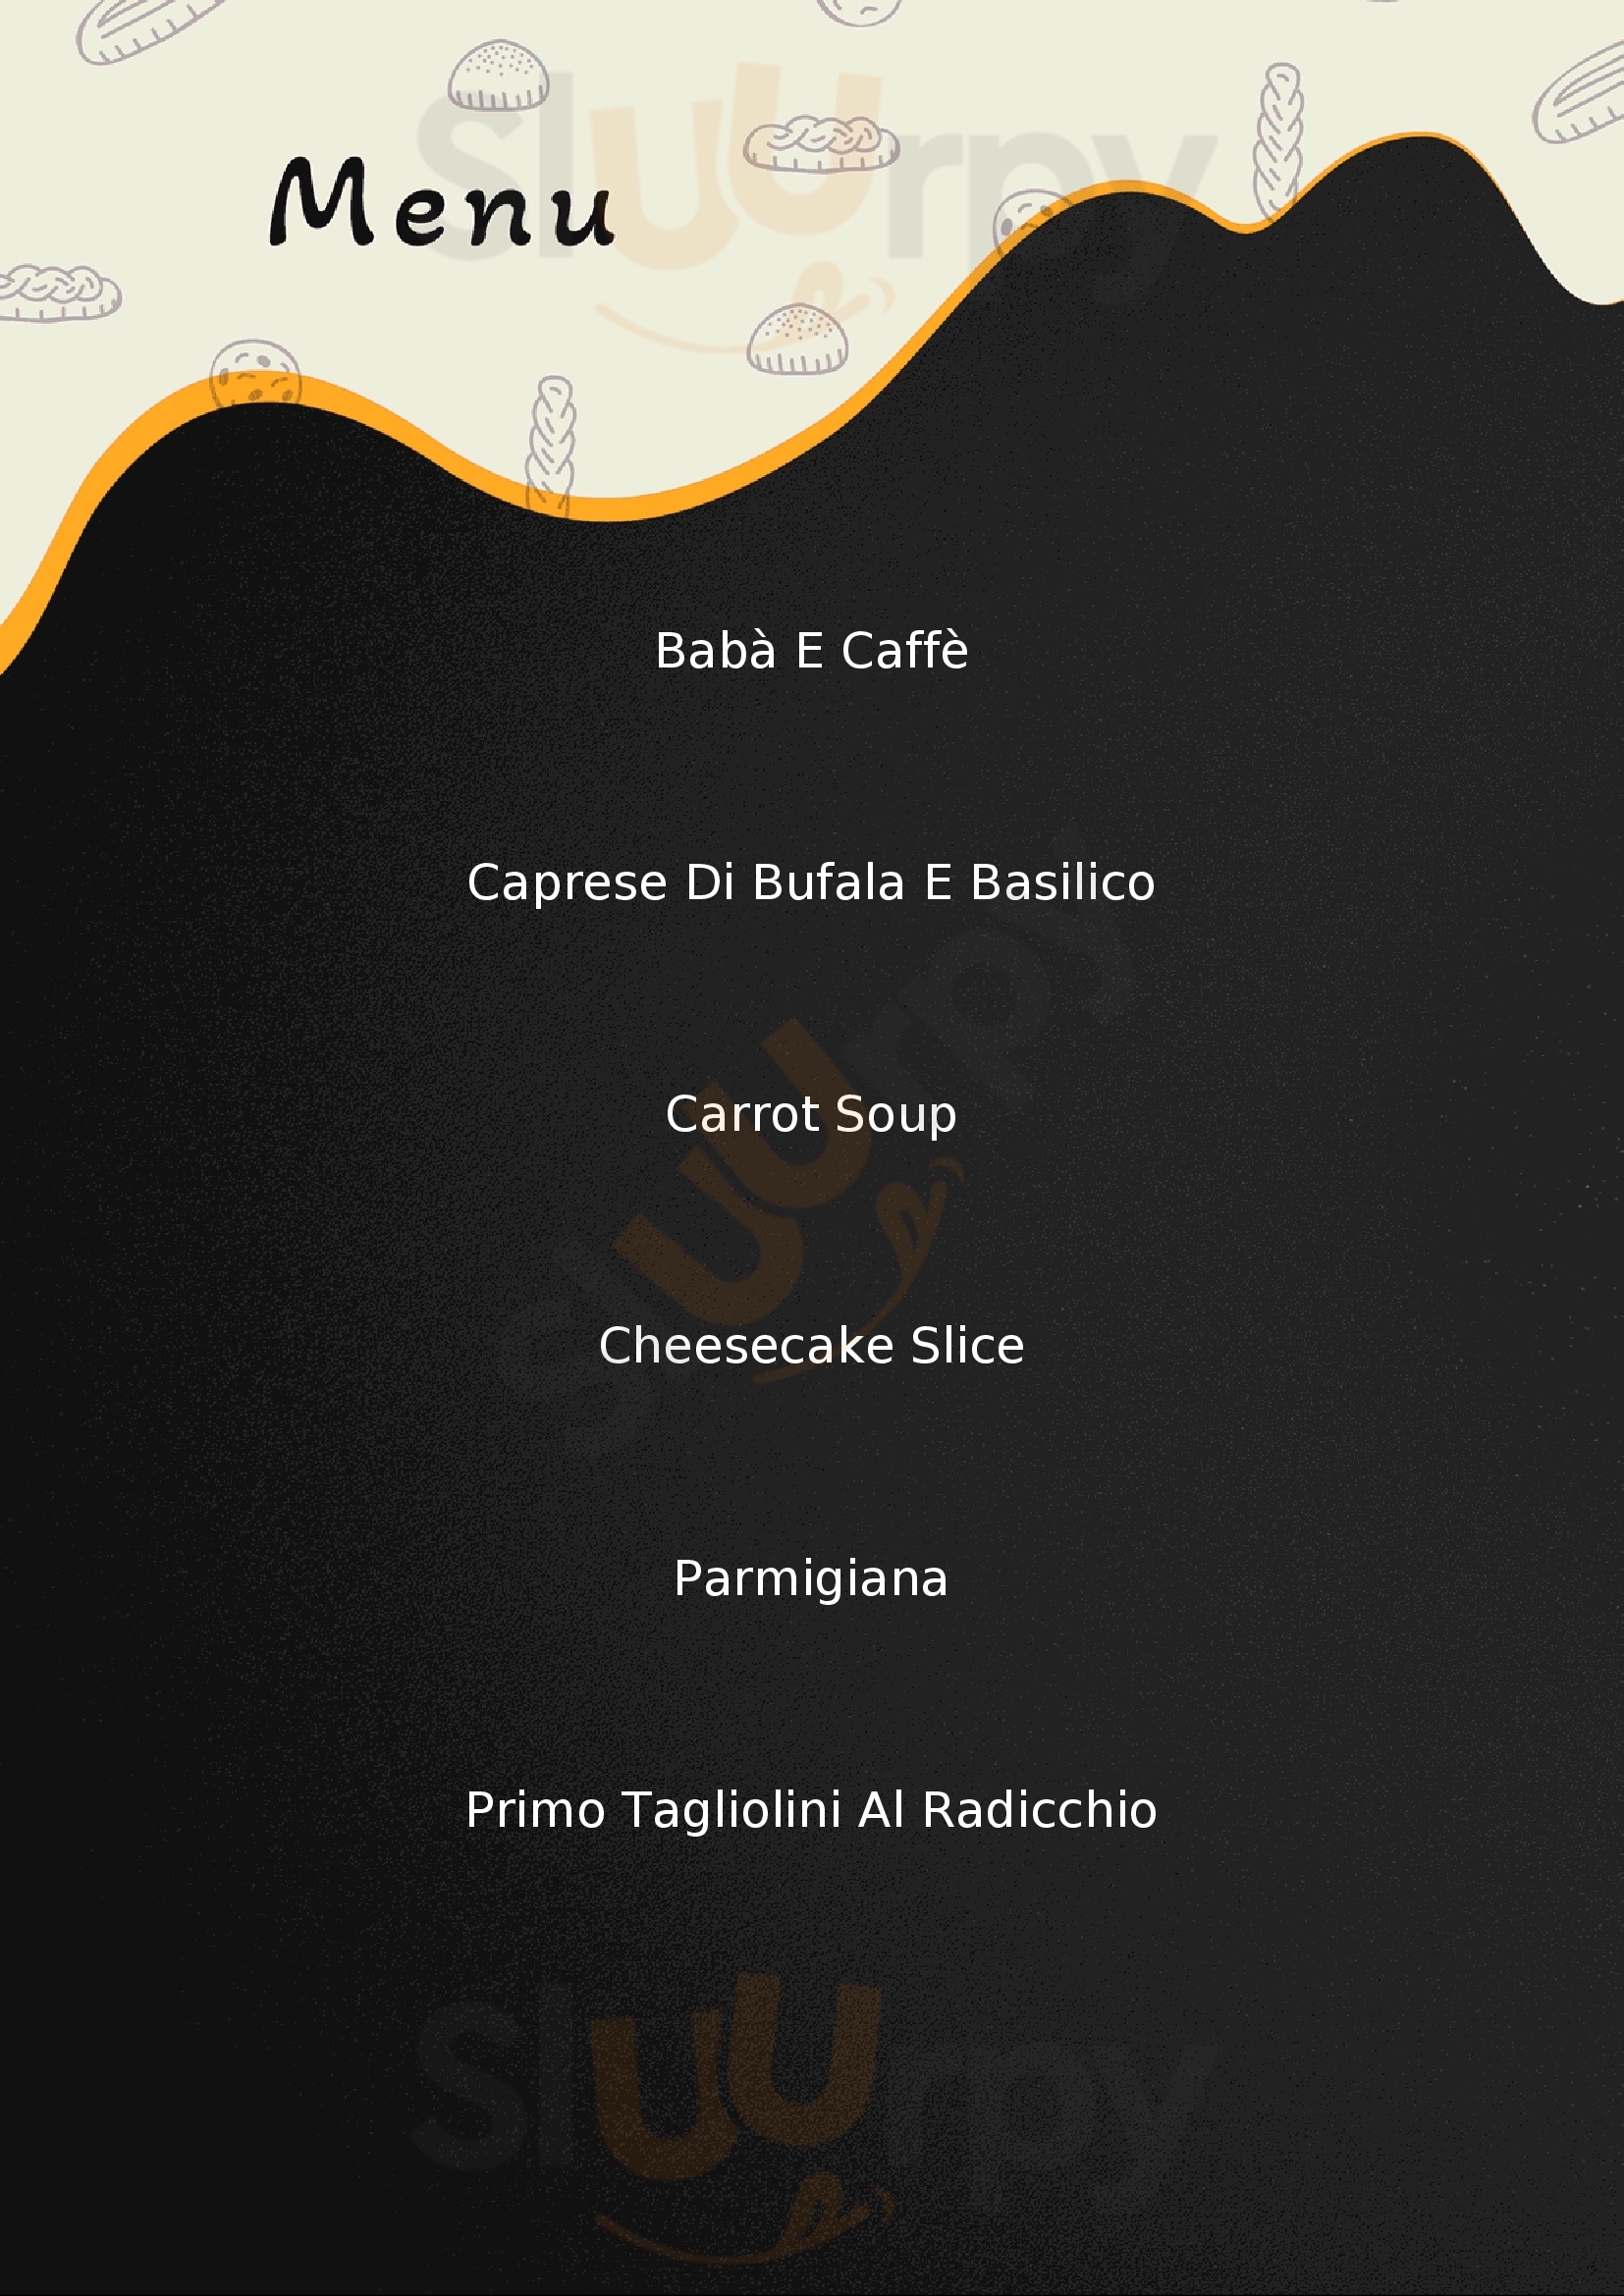 Cucca - Cucina e Caffe Milano menù 1 pagina